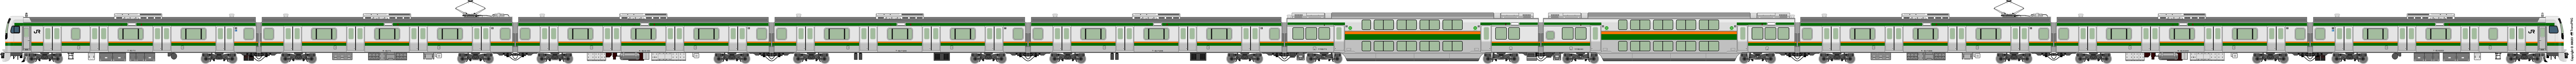 5010 - [5010] East Japan Railway 52163097230_fcd1b14562_o